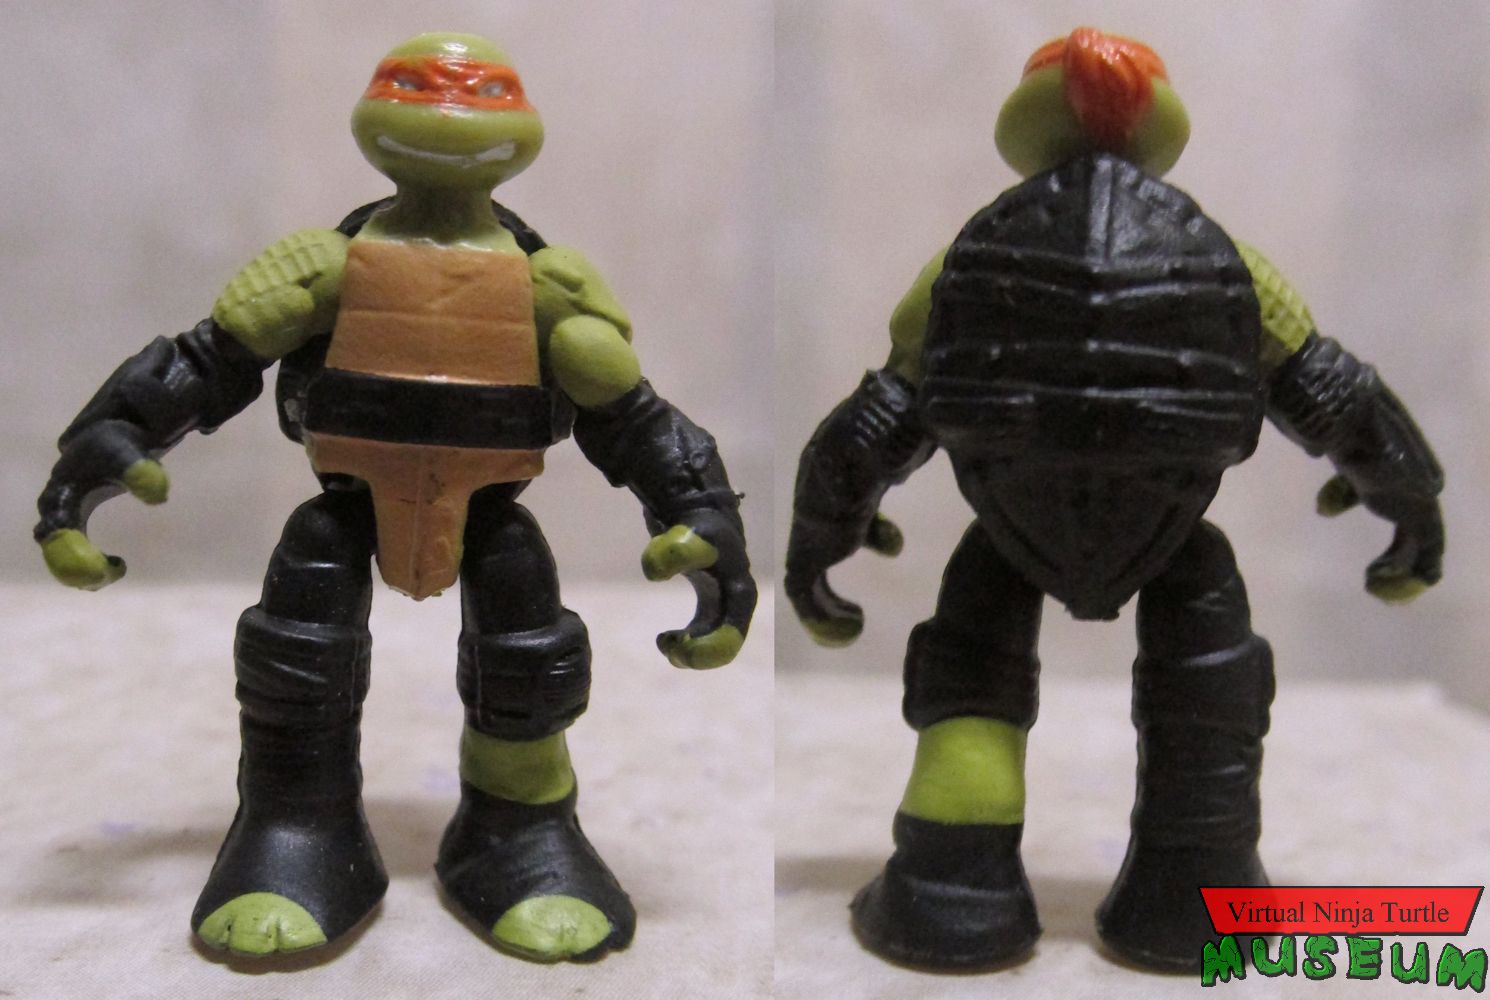 Michelangelo front & back